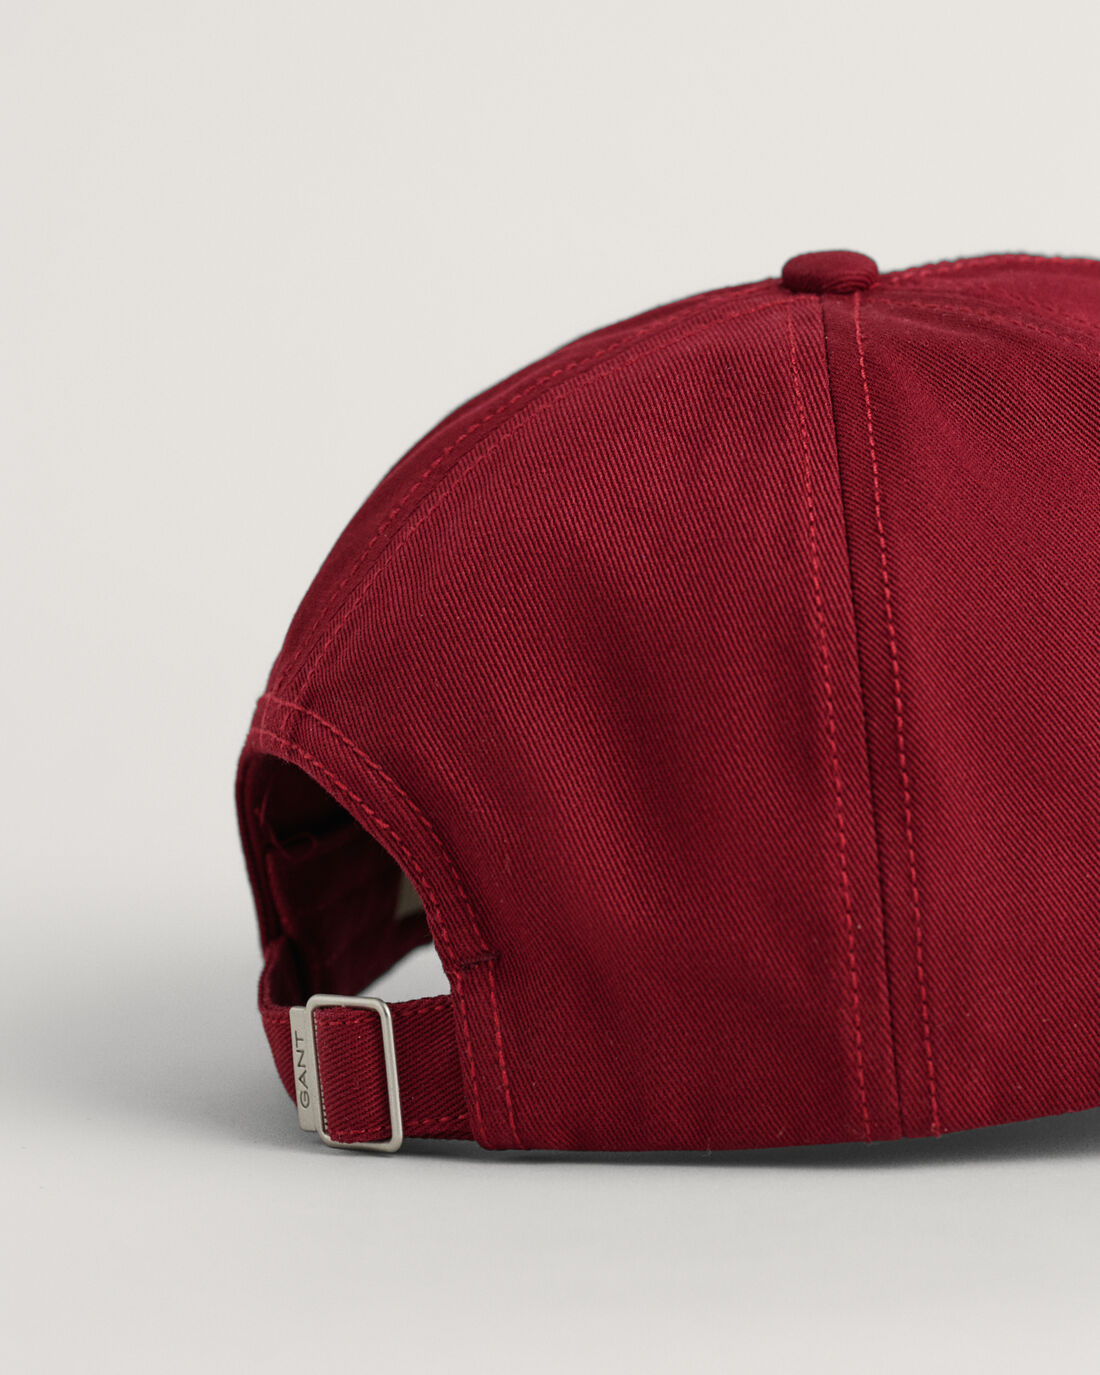 Gant Cotton Shield Cap Crimson